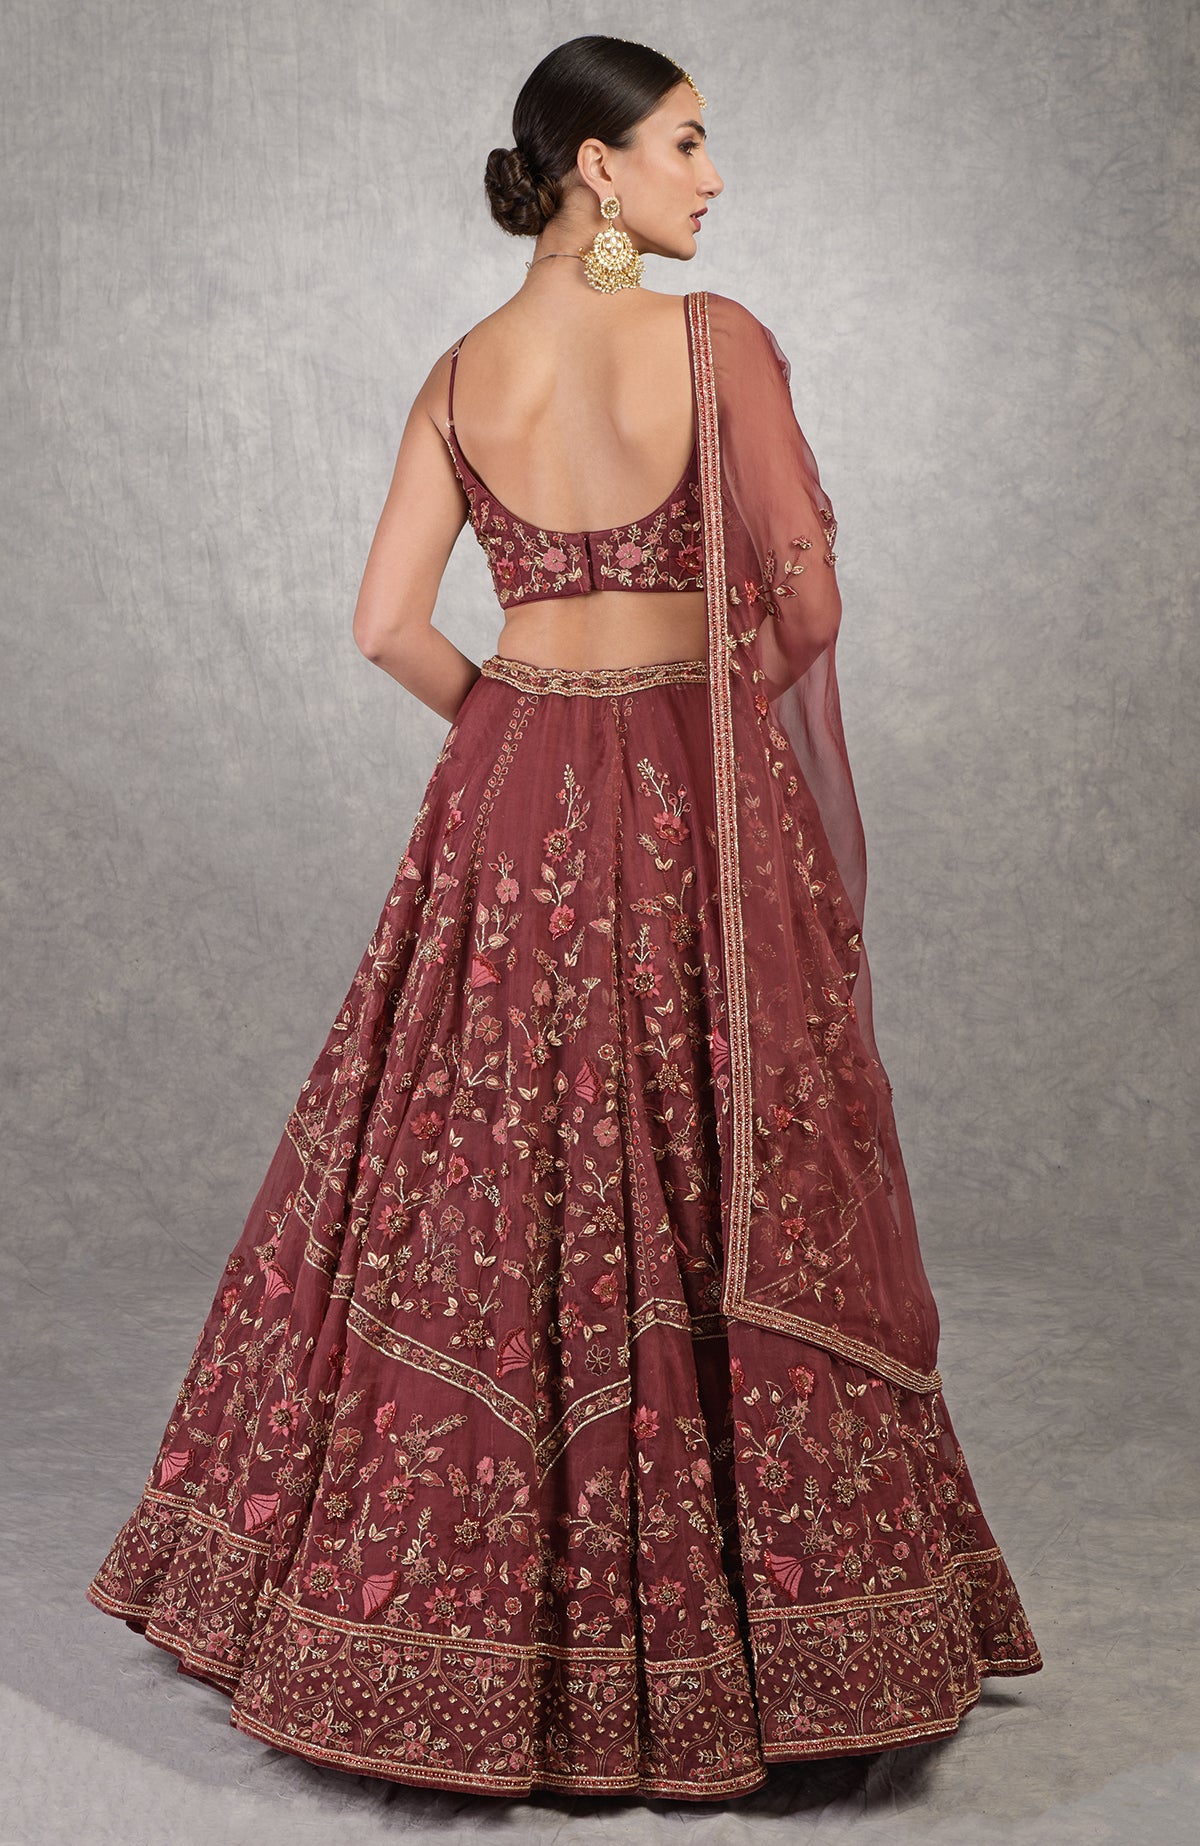 22 Matching Lehenga & Sherwani for Indian Brides & Grooms | Couple outfits,  Couple wedding dress, Wedding dress inspiration